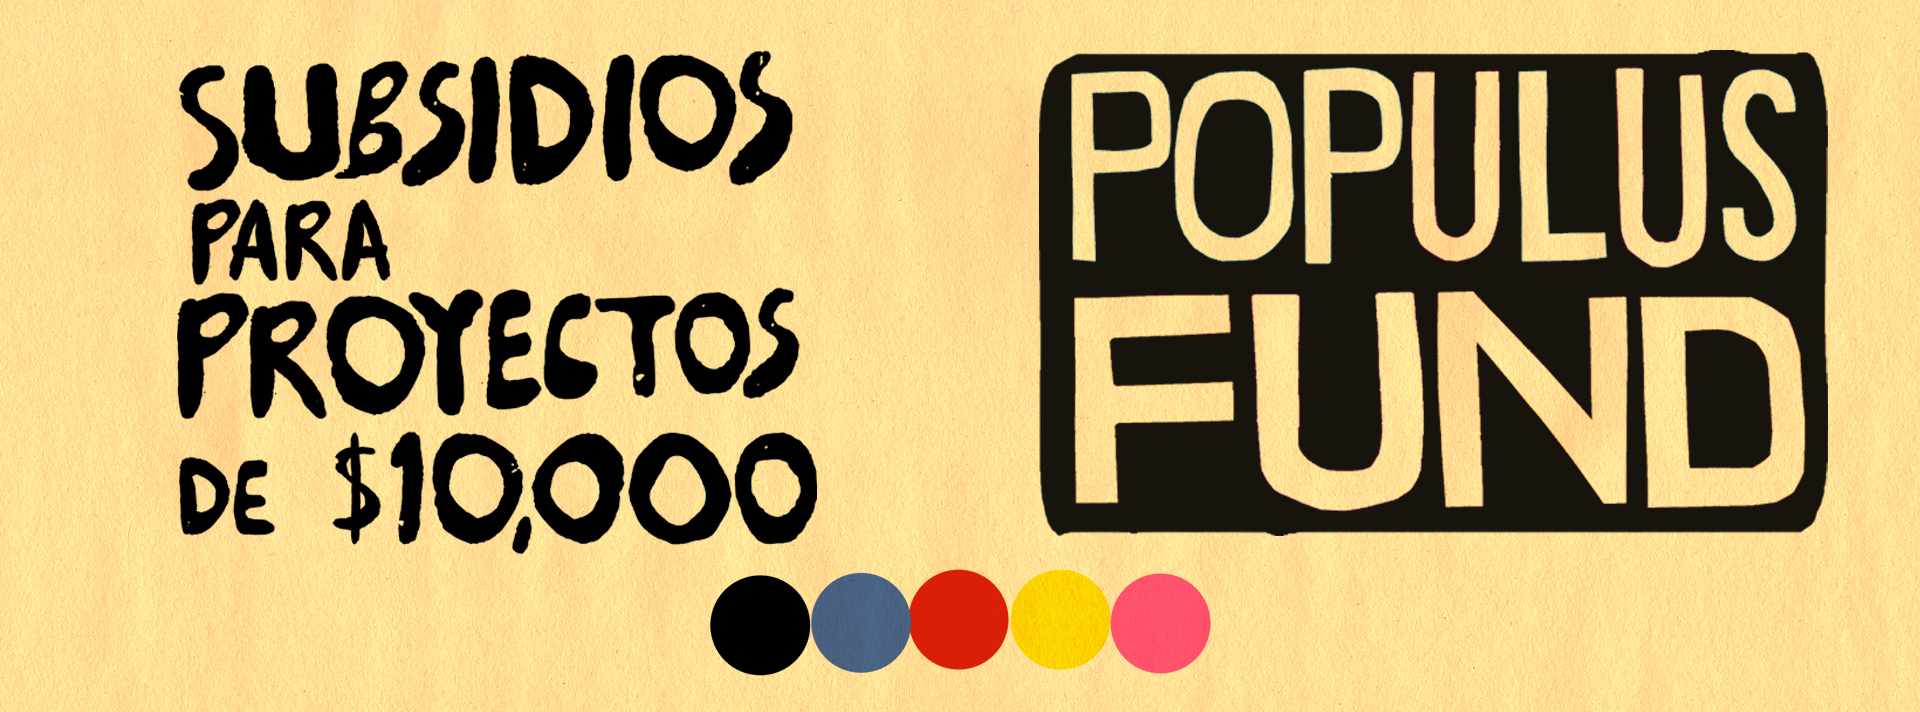 Populus Fund banner in spanish